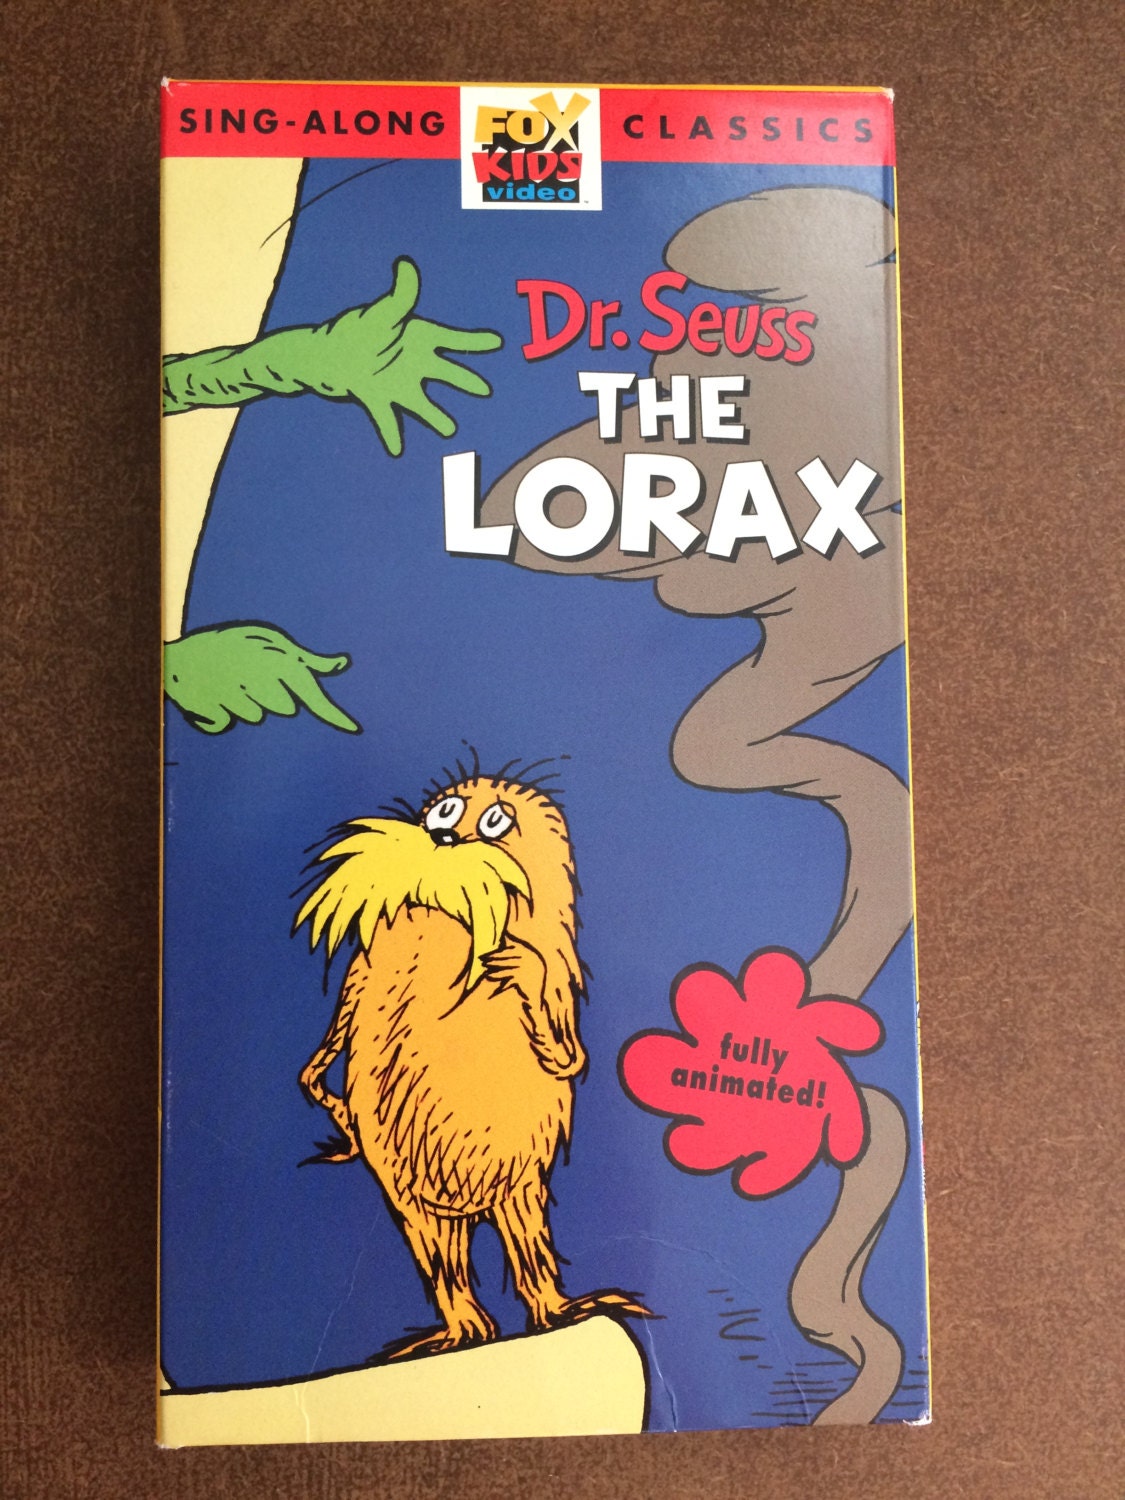 Dr. Seuss The Lorax Sing Along Classics Vhs